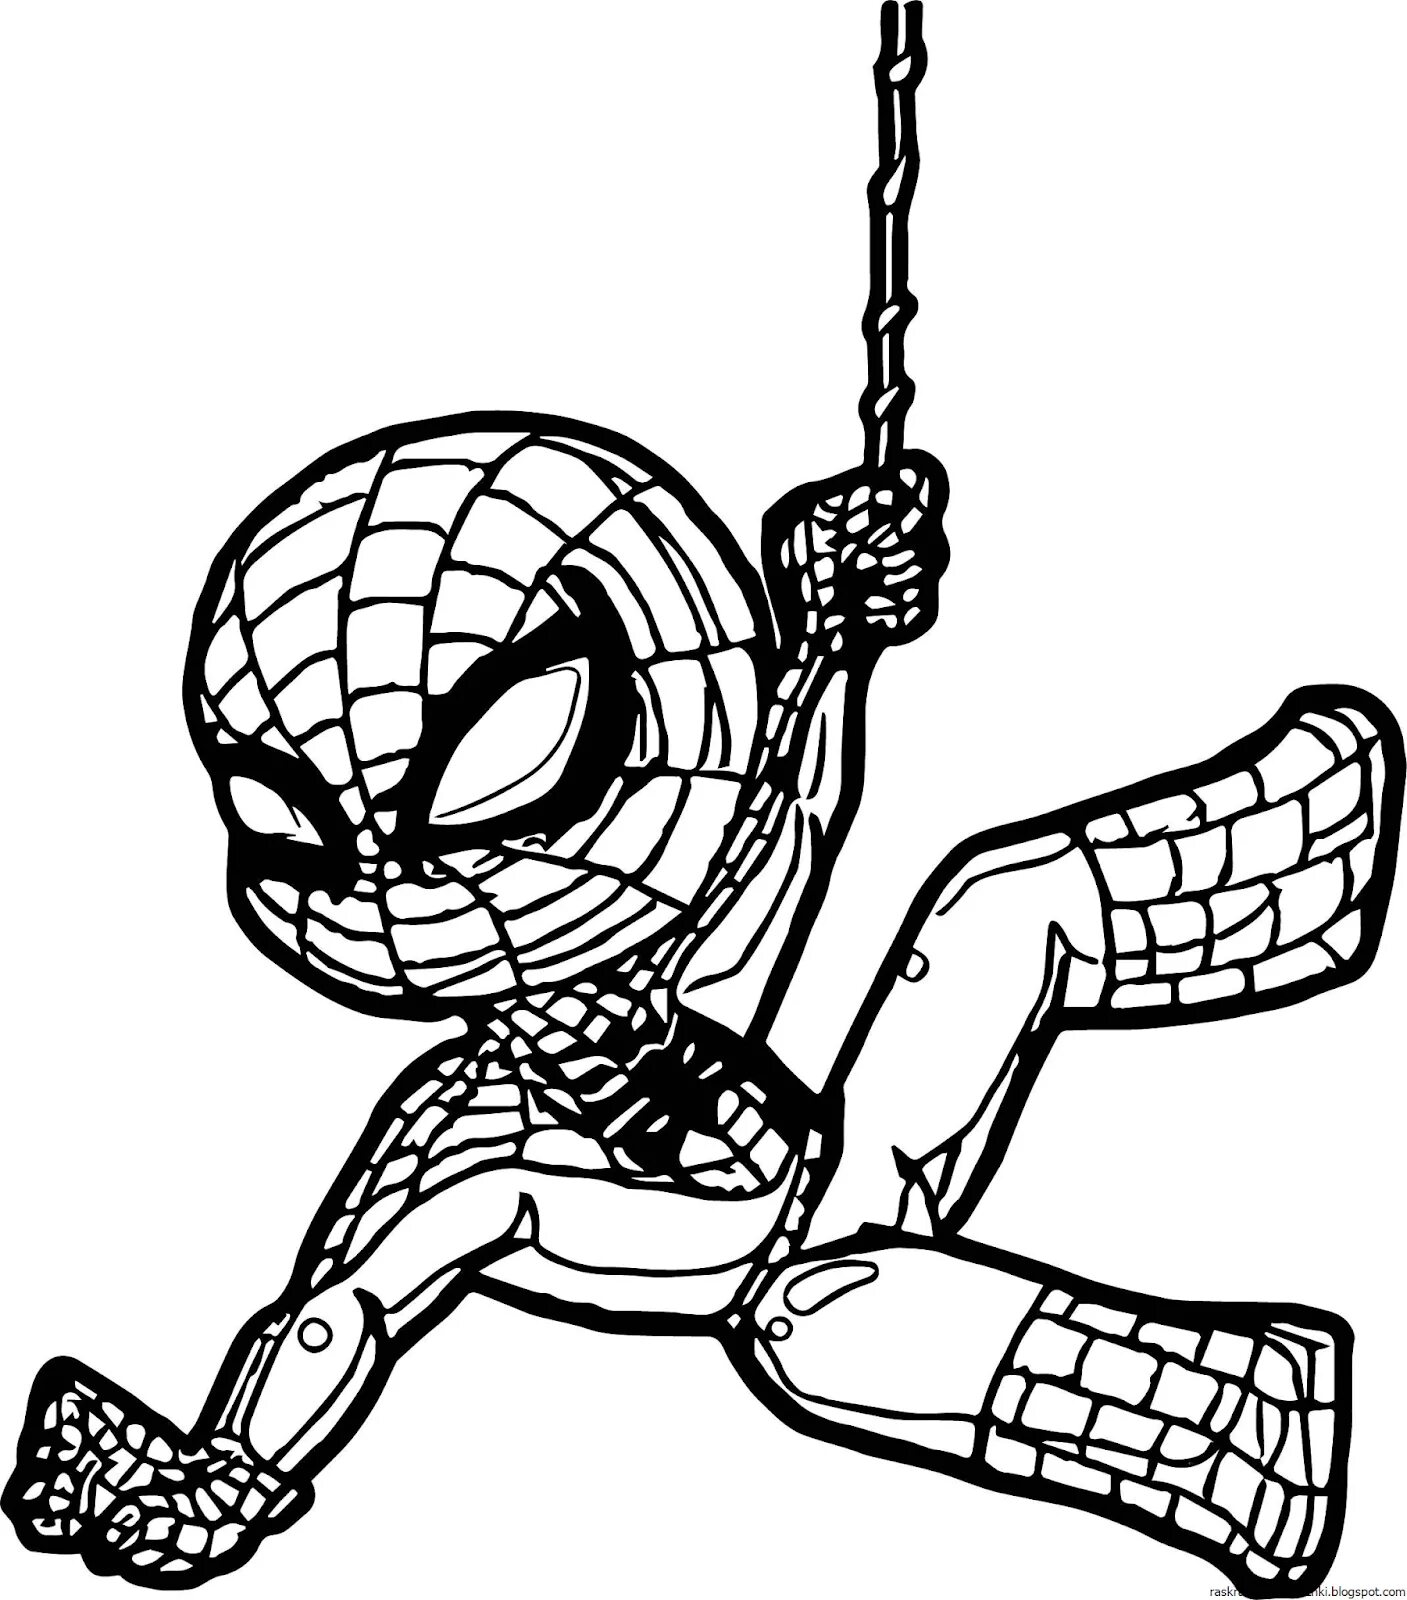 Spiderman for kids #5